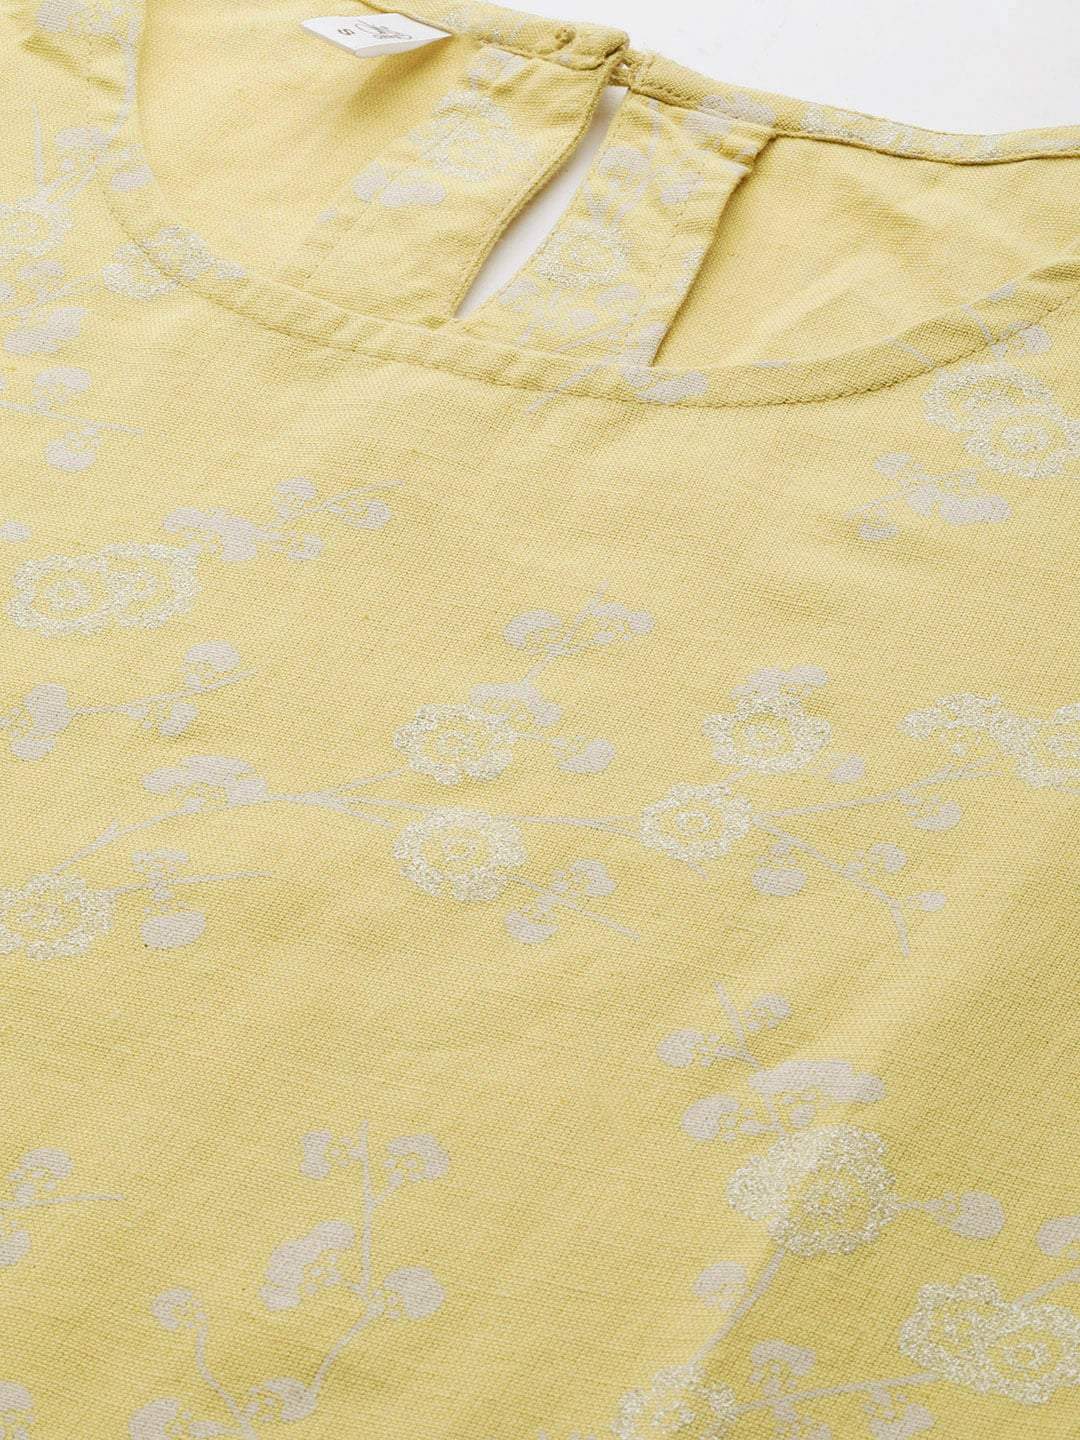 Women's  Yellow & White Floral Print Straight Kurta - AKS